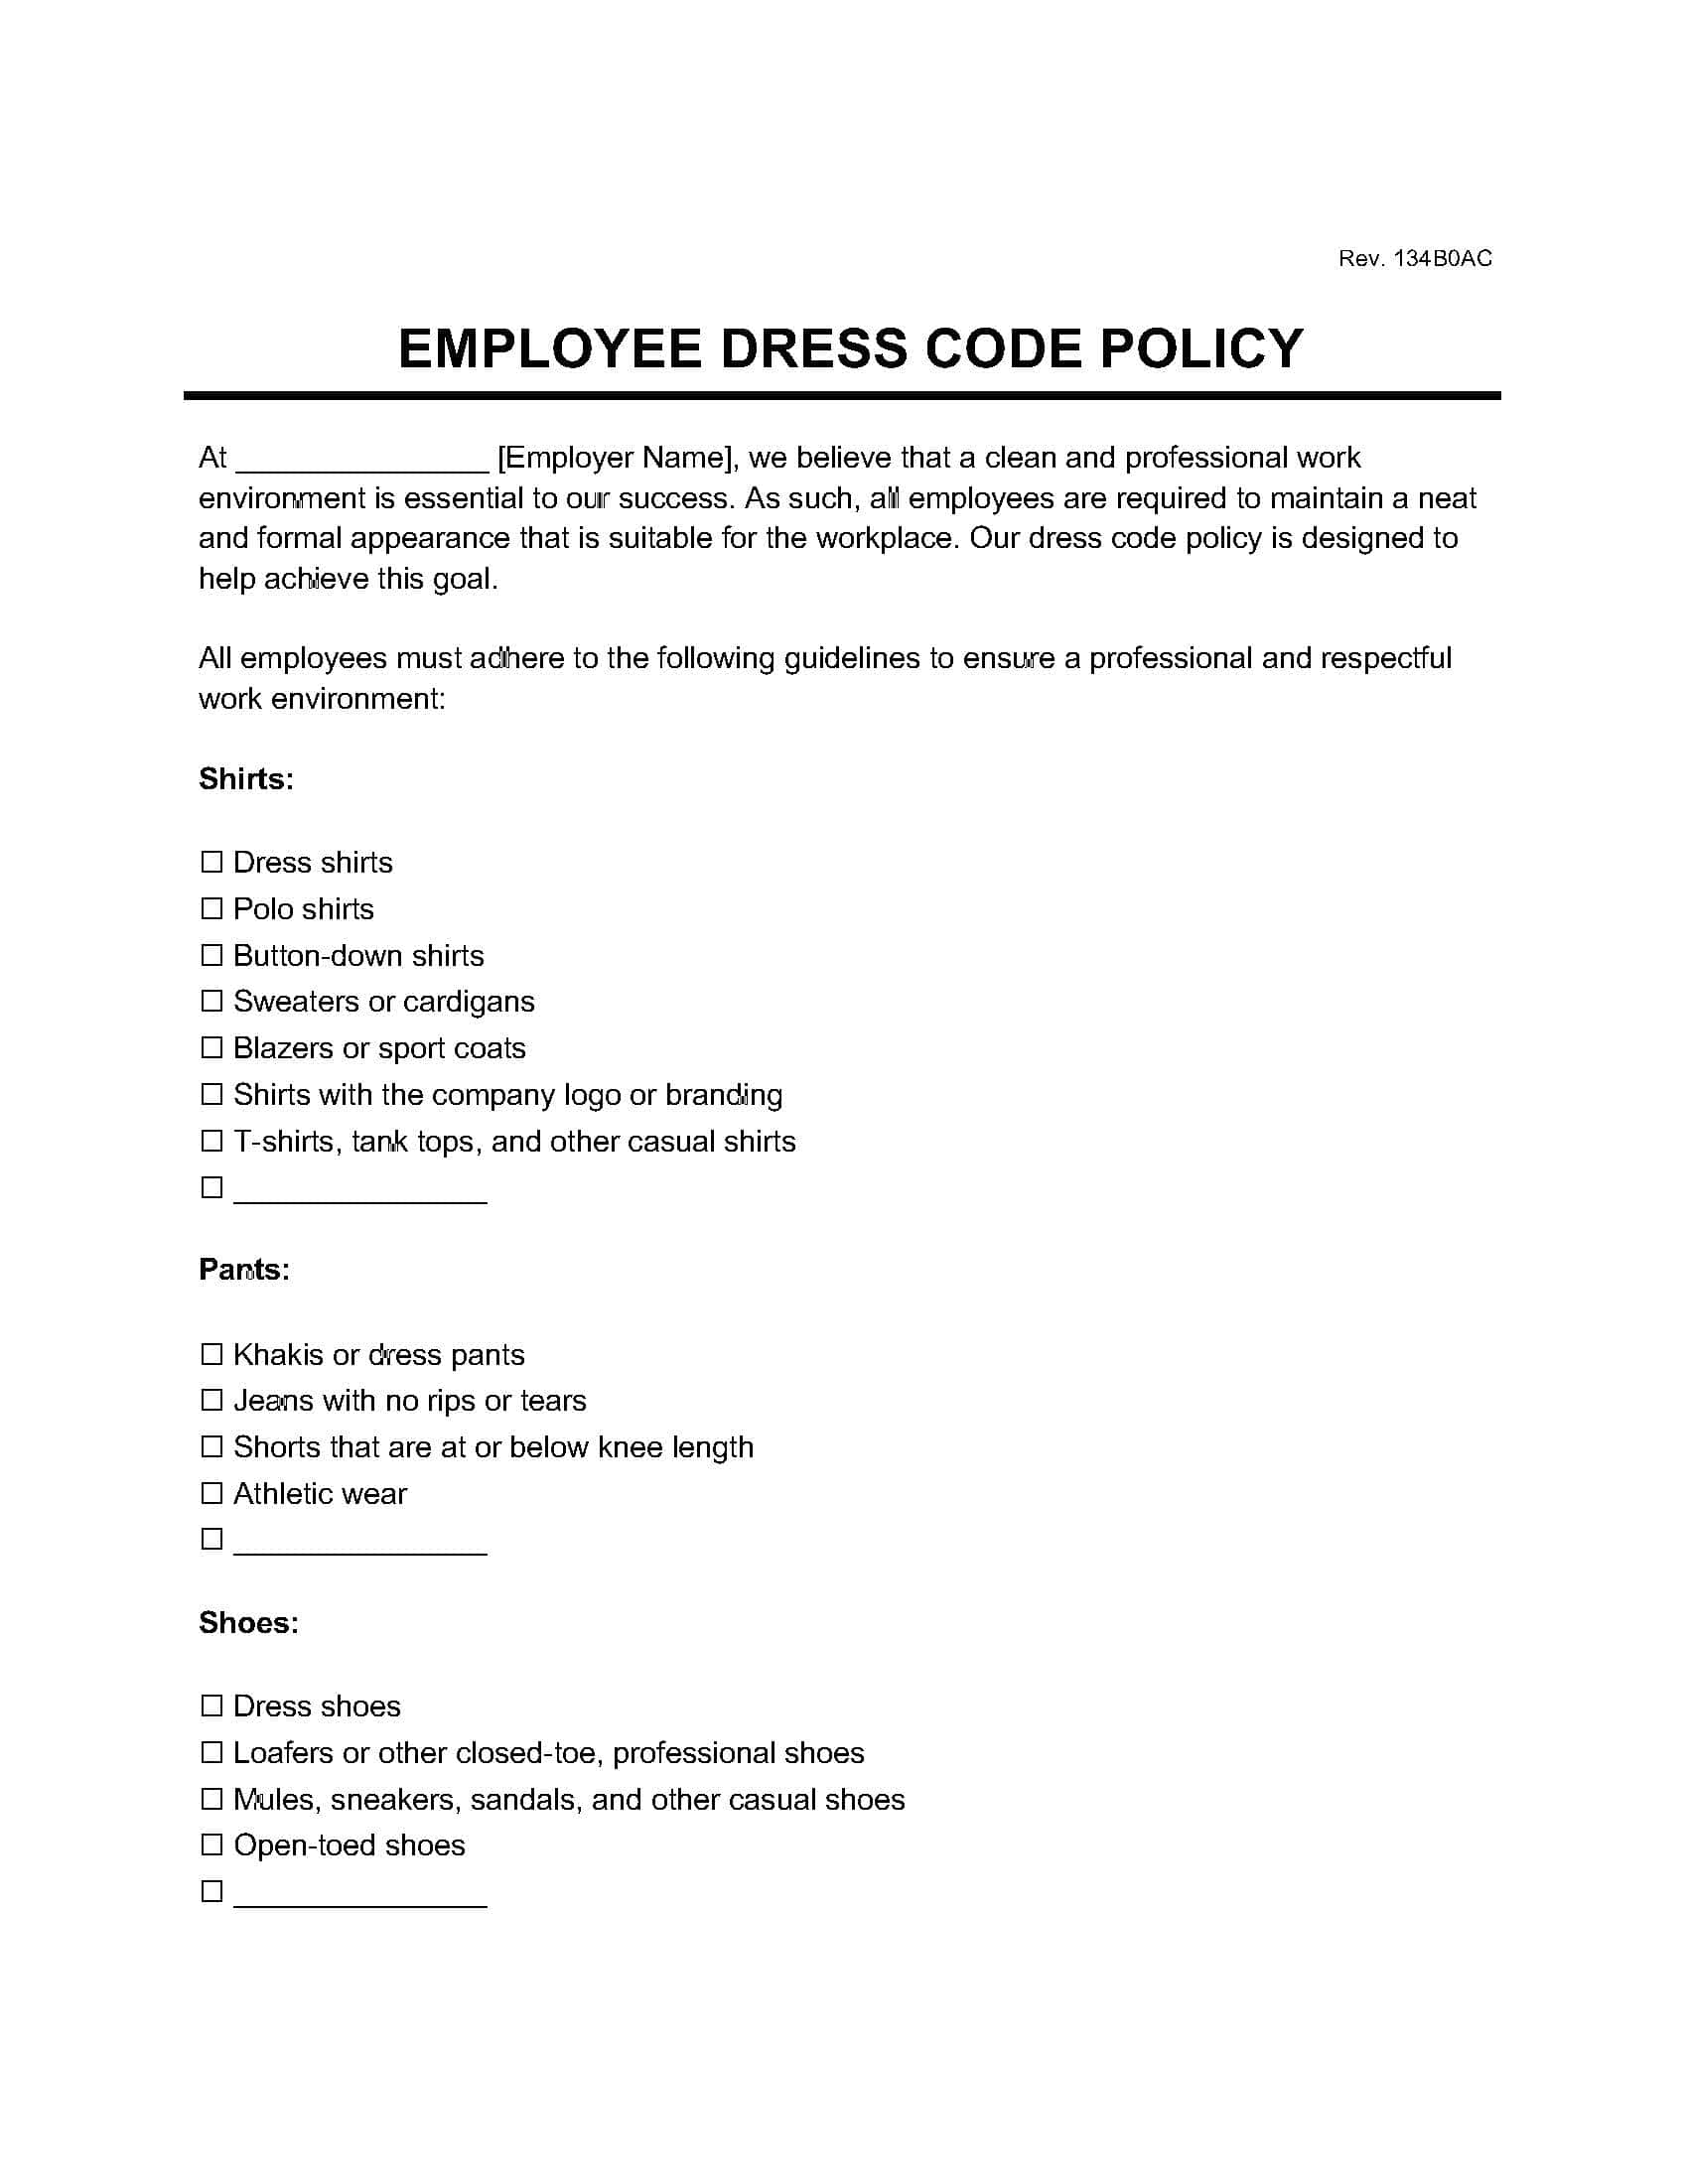 Employee Dress Code Policy screenshot